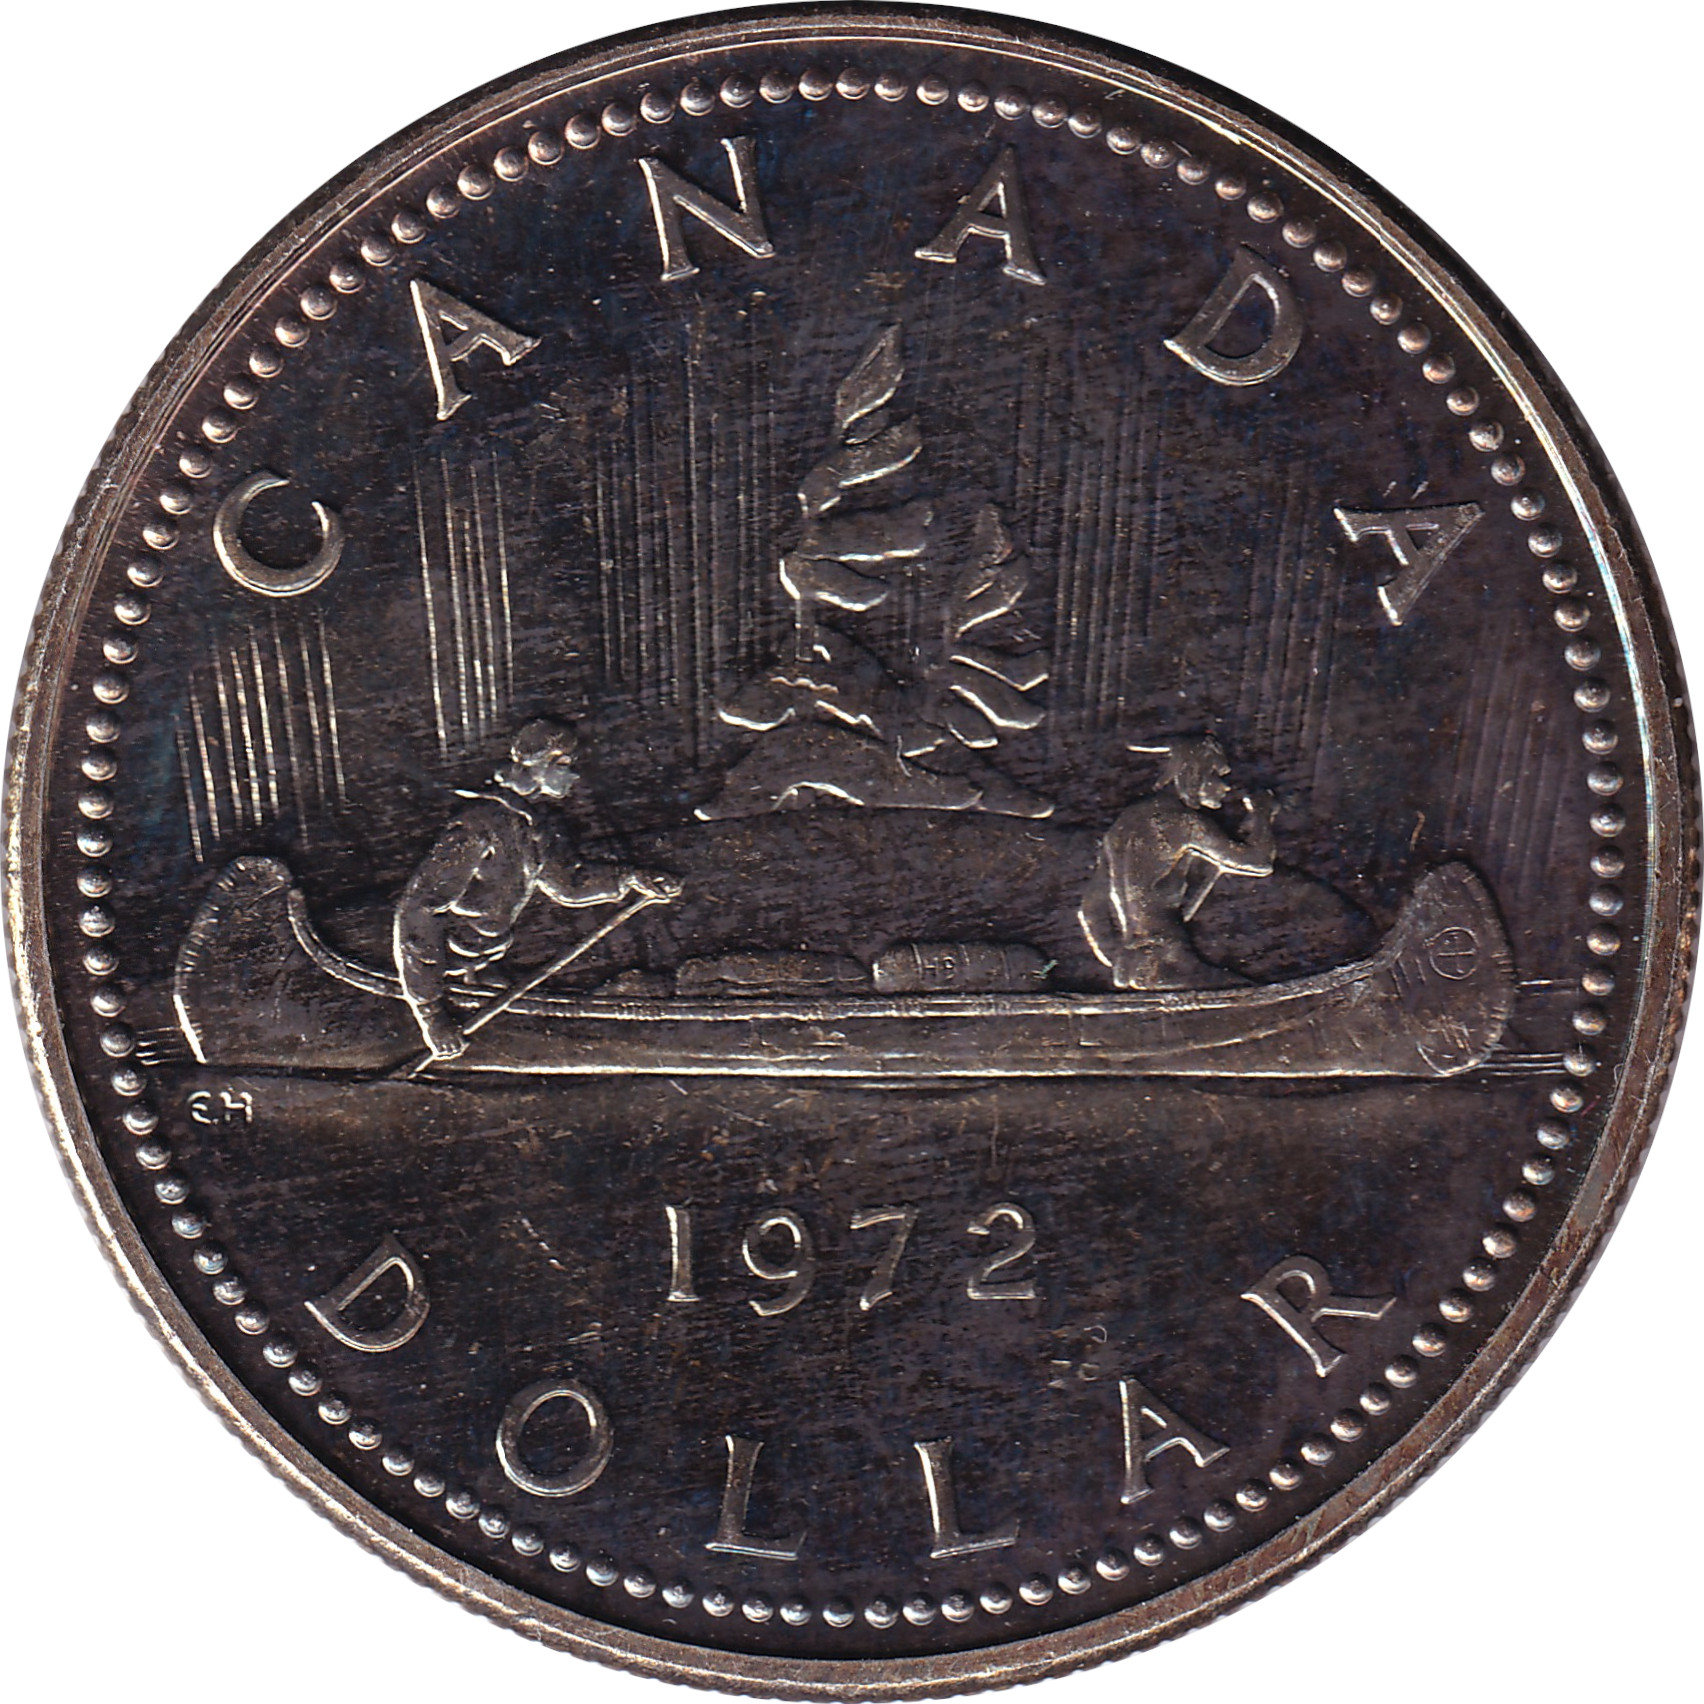 1 dollar - Elizabeth II - Buste mature - Voyageur